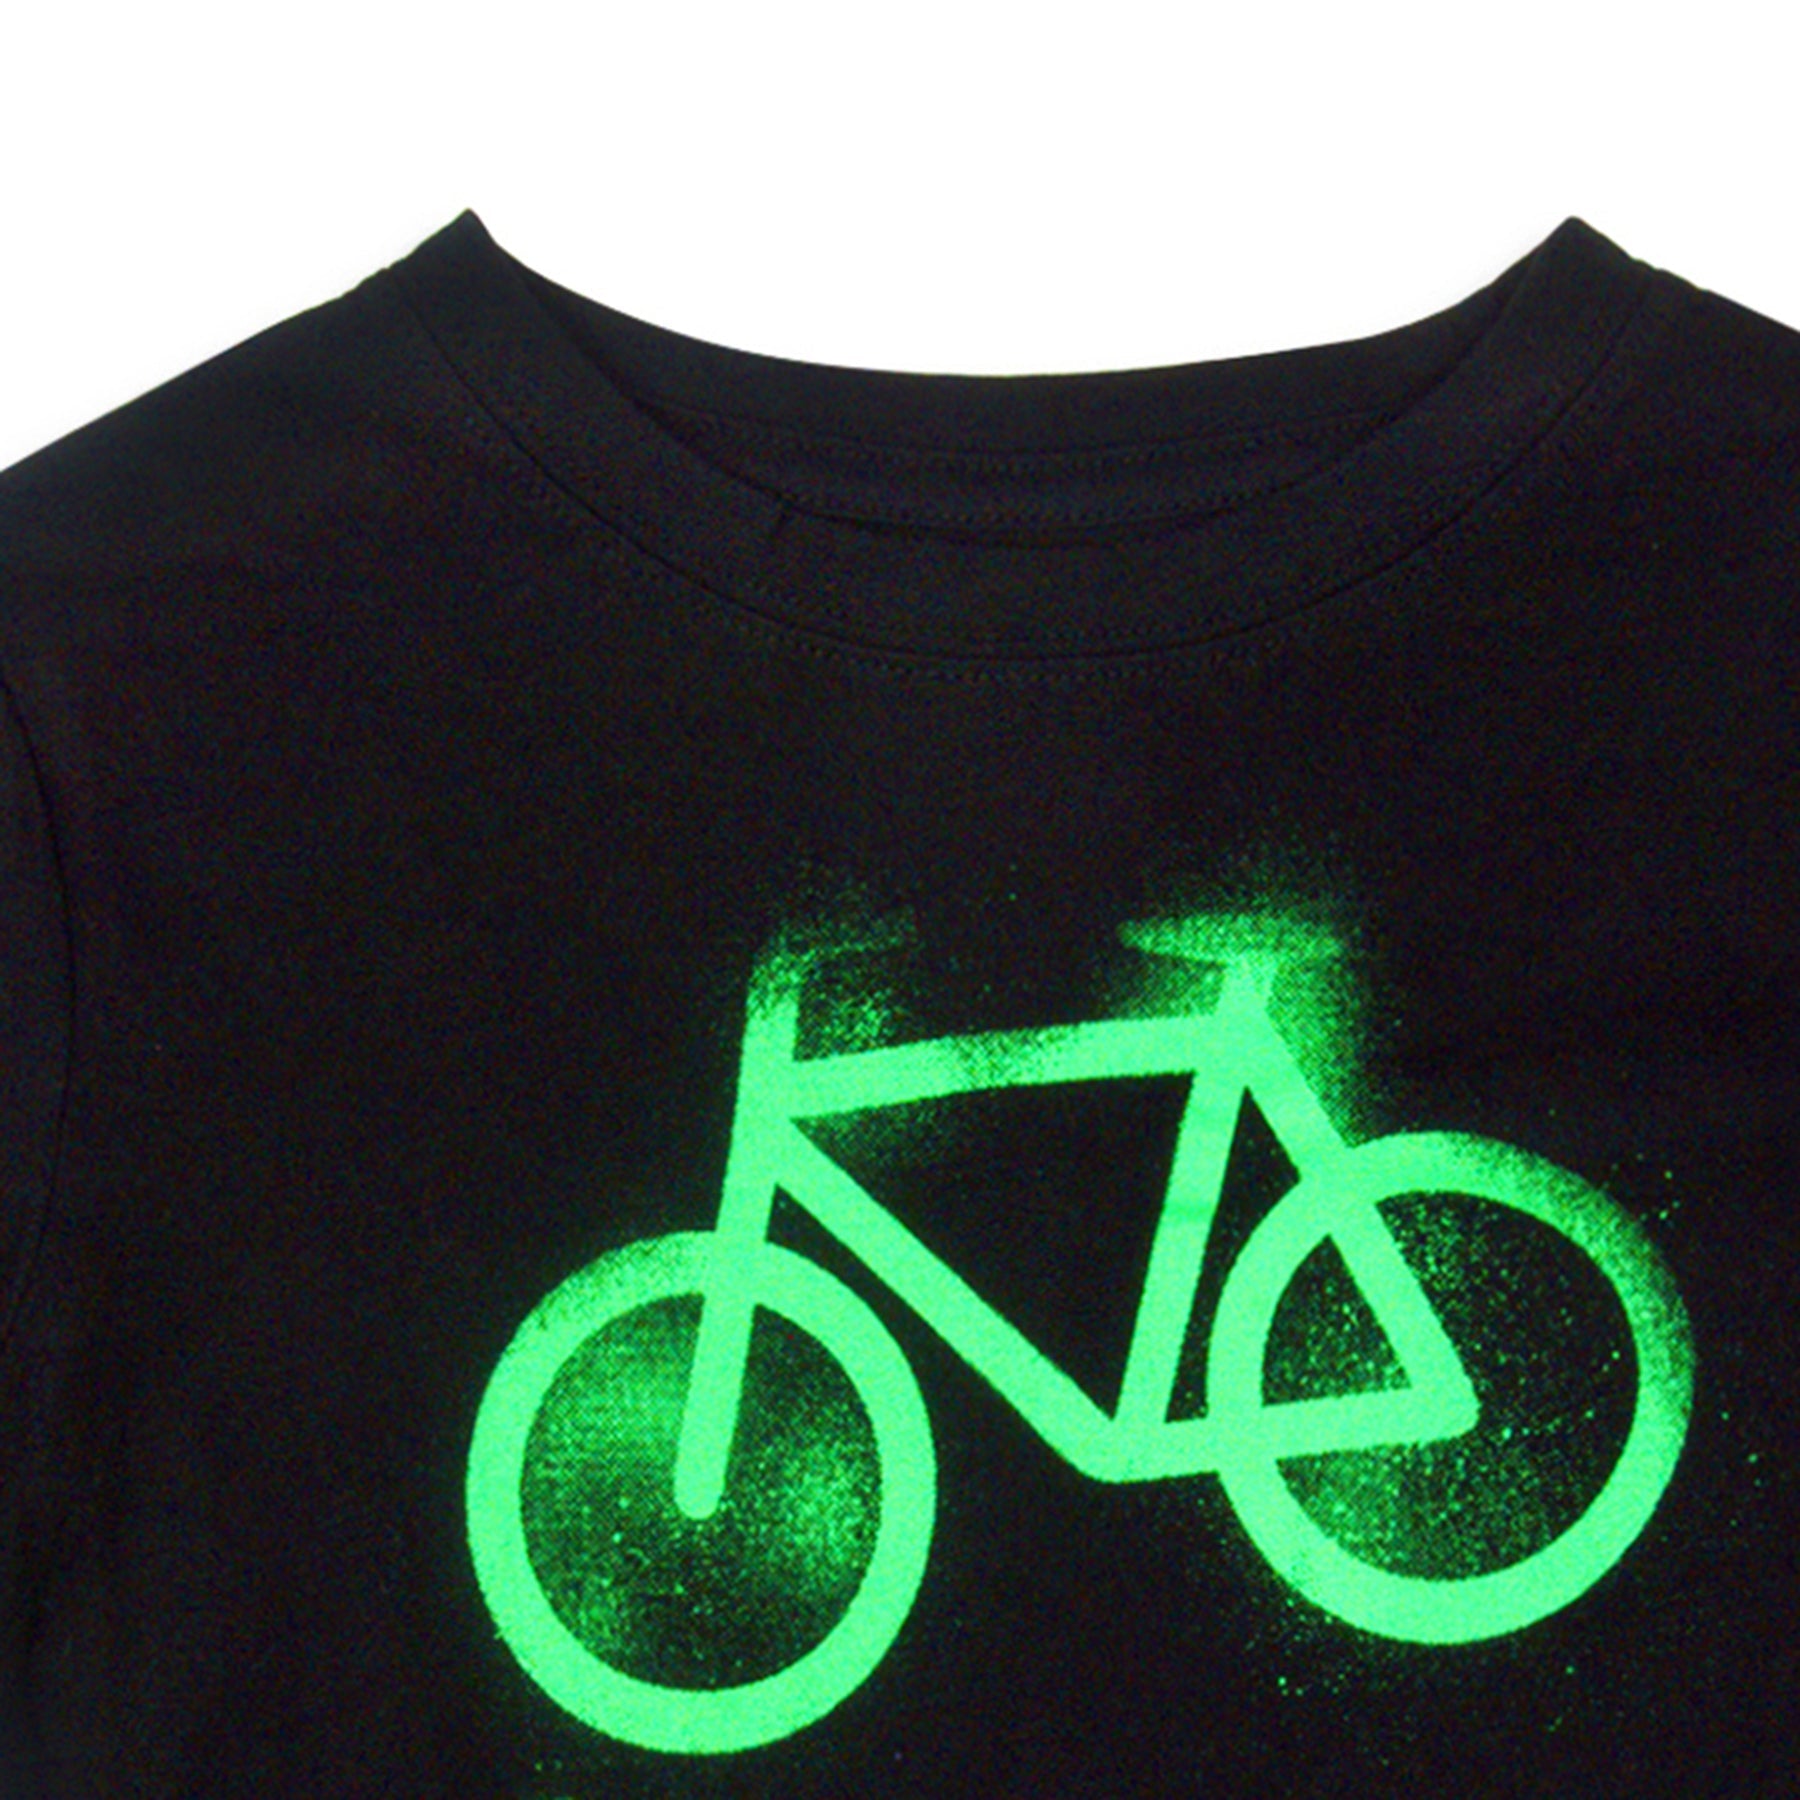 Camiseta Negra Con Bicicleta Verde